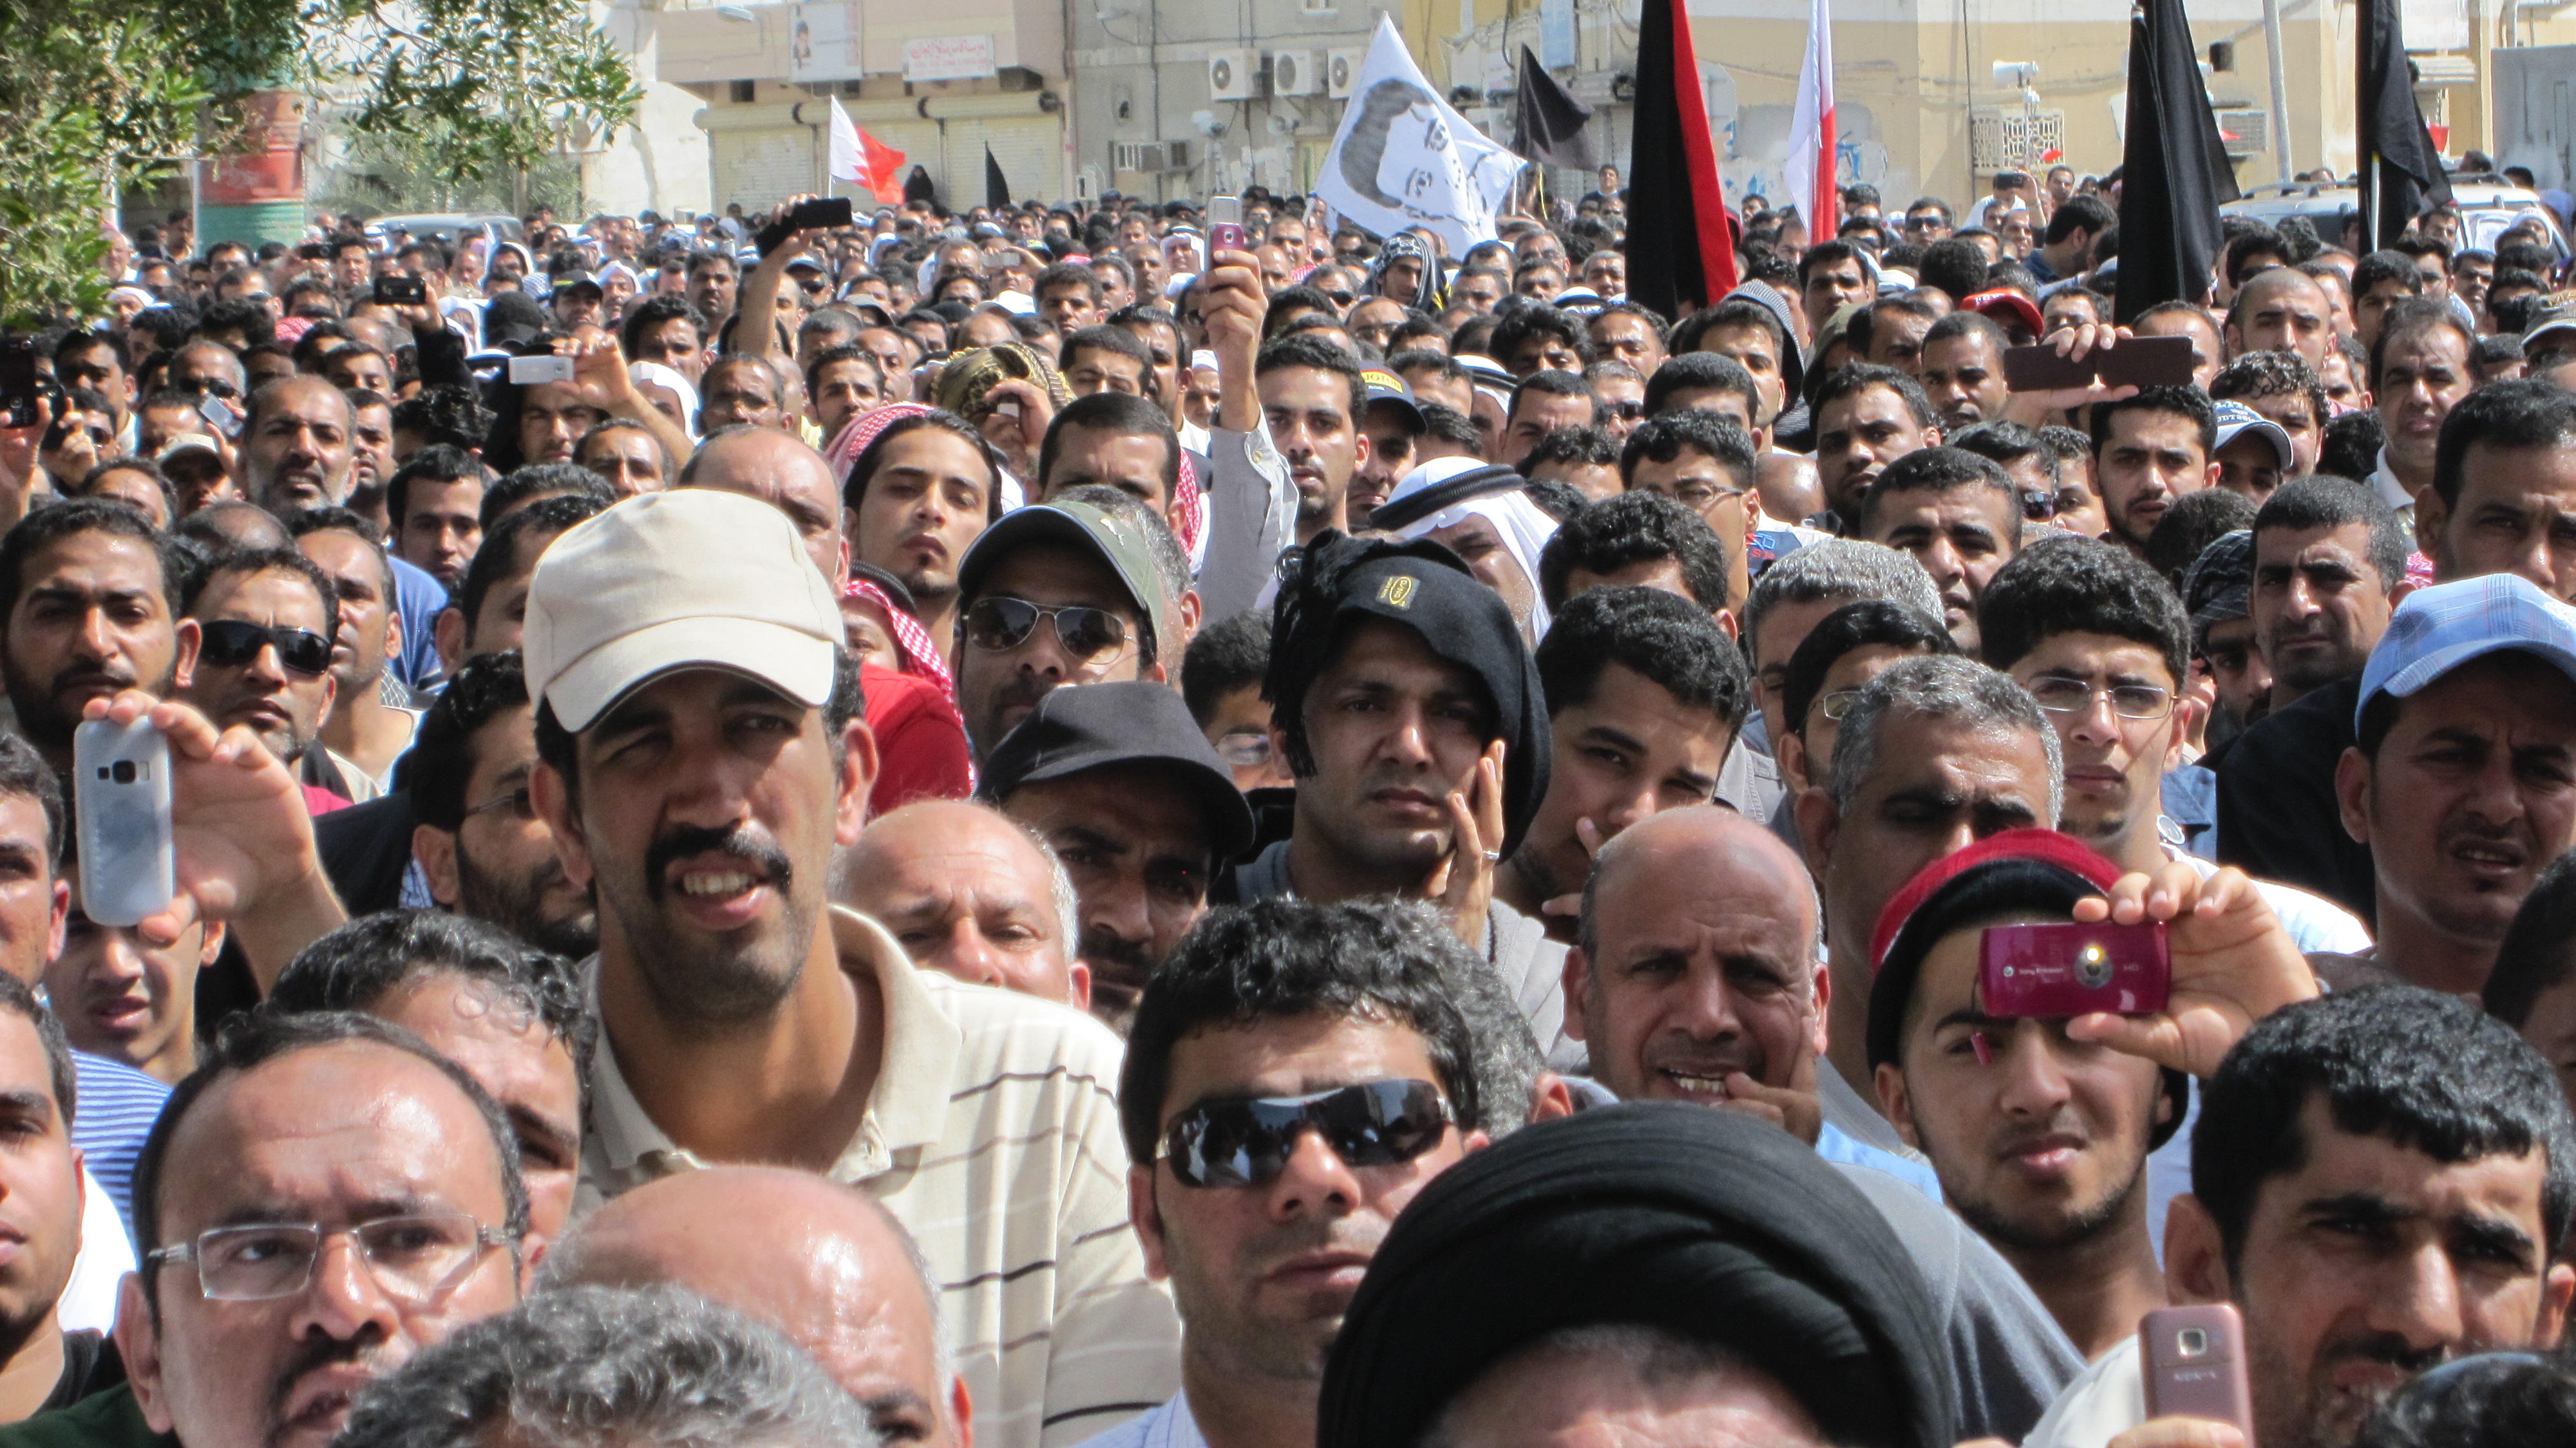 File:Crowd shot - Flickr - Al Jazeera English.jpg - Wikimedia Commons